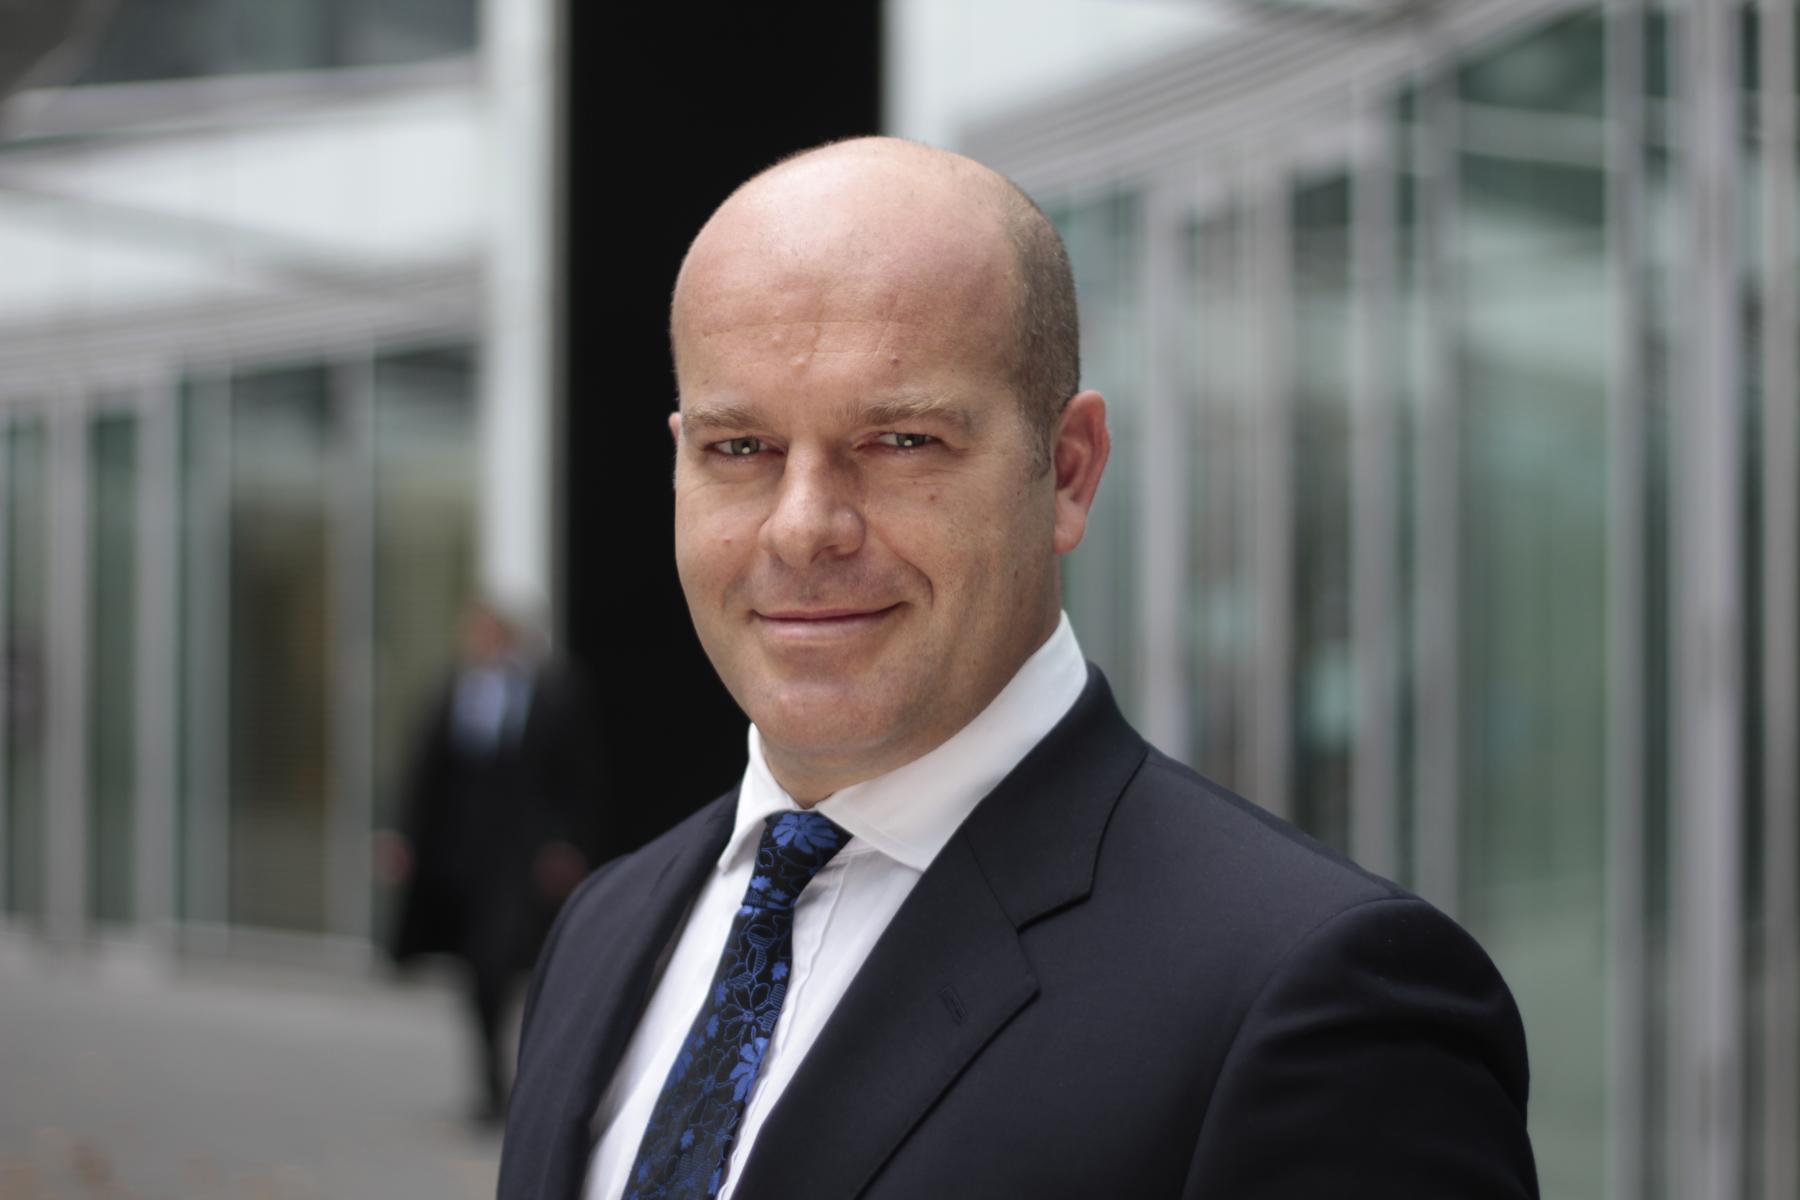 Damian Harrington, dyrektor Colliers International ds. badań w regionie EMEA